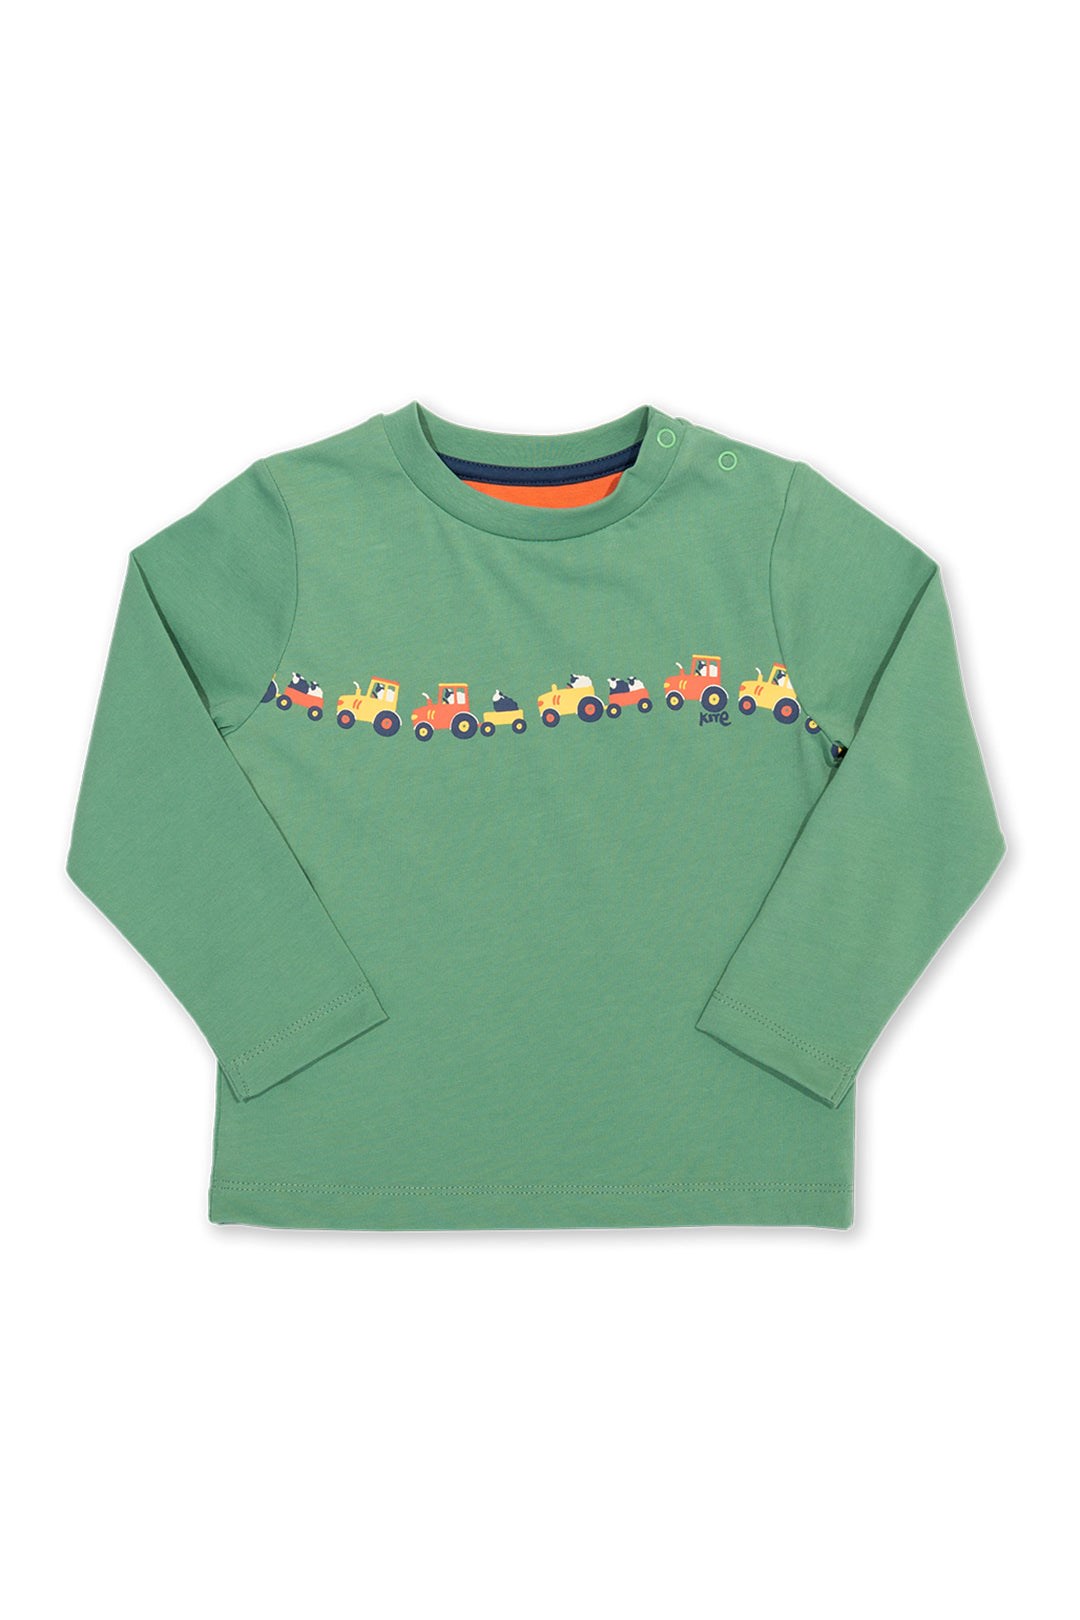 Tractor Trail Baby/Kids Organic Cotton T-Shirt -